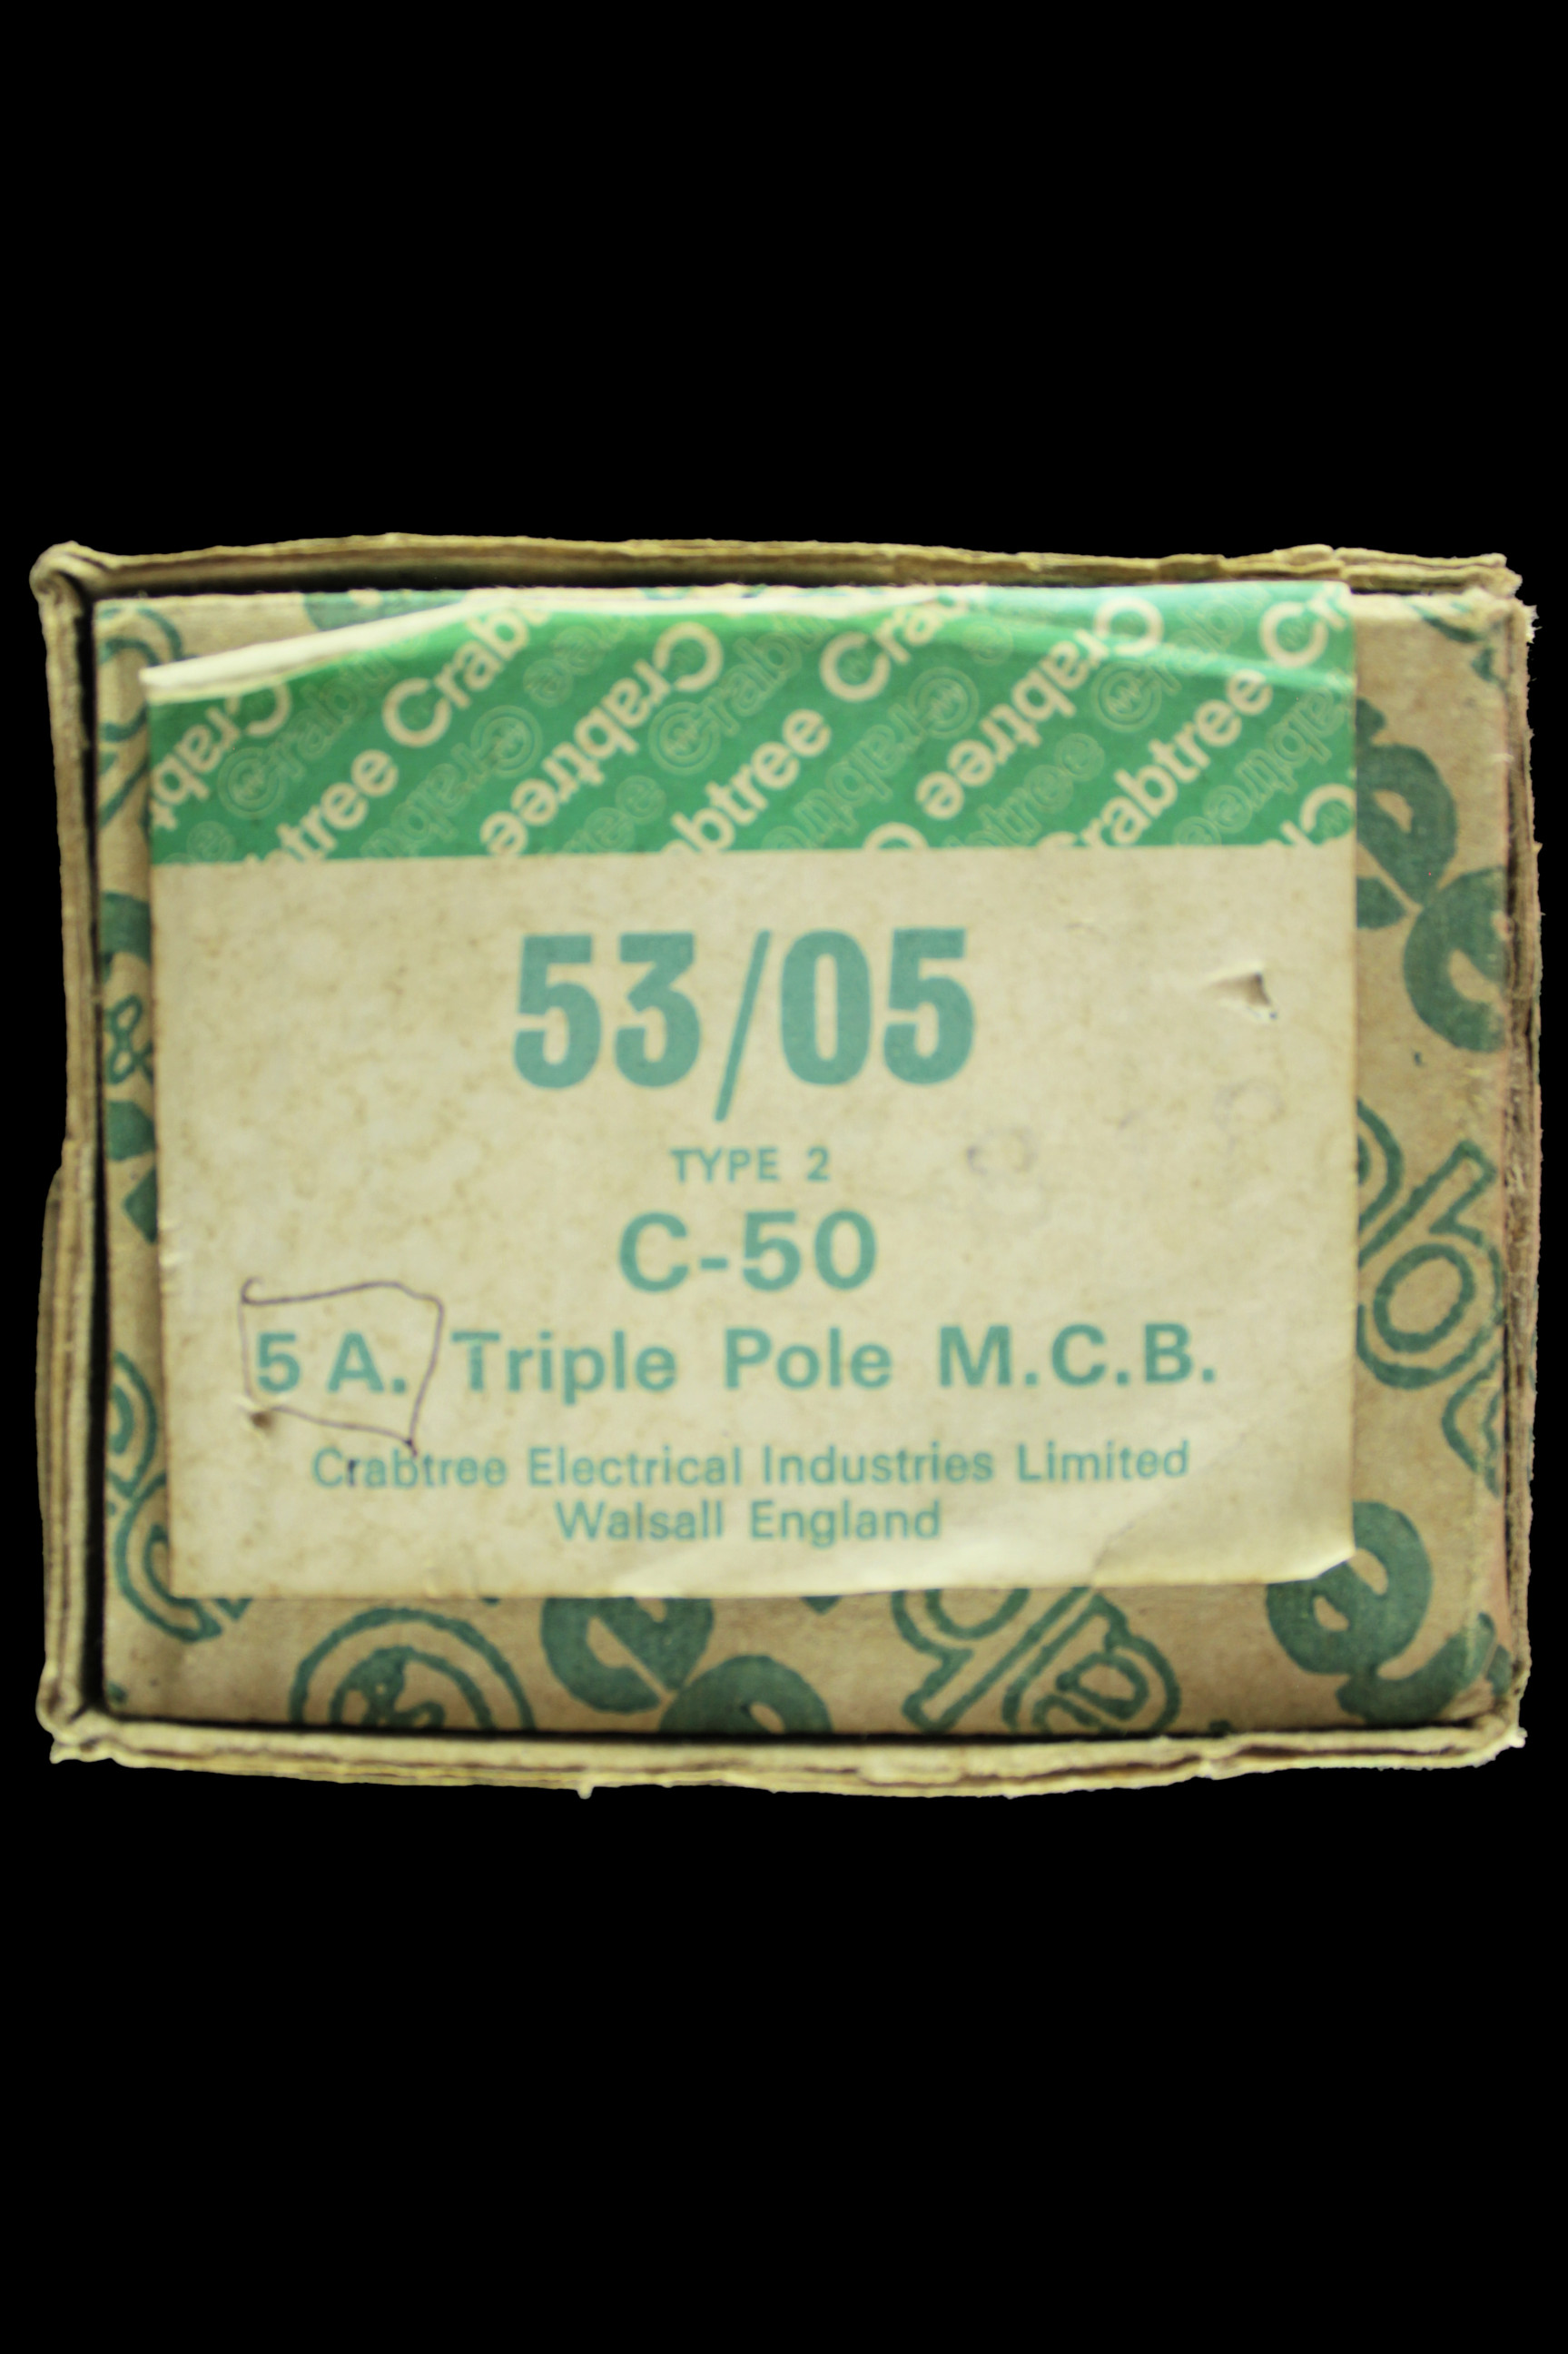 CRABTREE 5 AMP TYPE 2 M4.5 TRIPLE POLE MCB CIRCUIT BREAKER C50 C-50 53/05